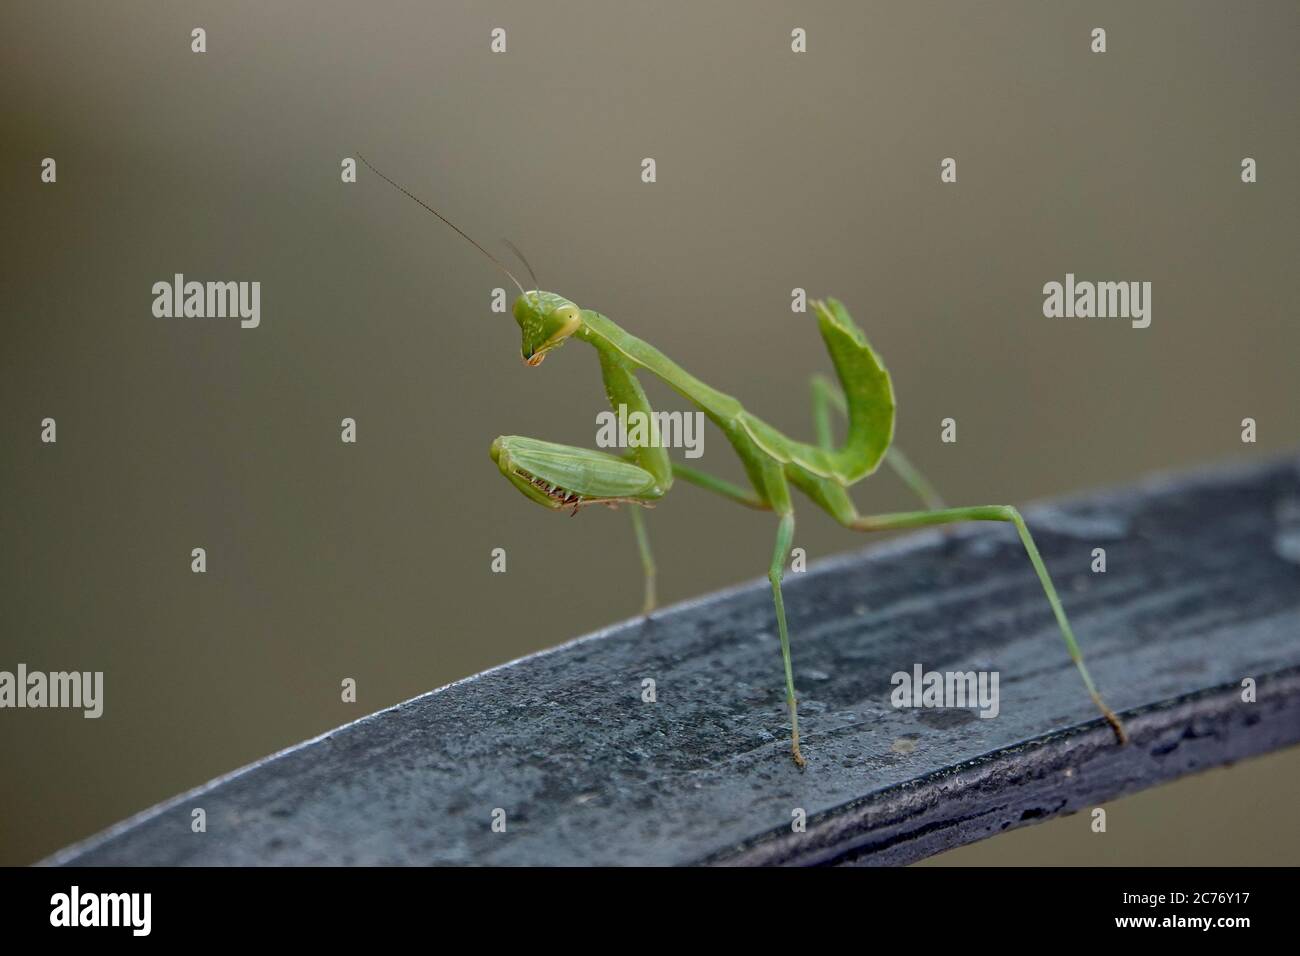 A close up of a praying mantis. Stock Photo